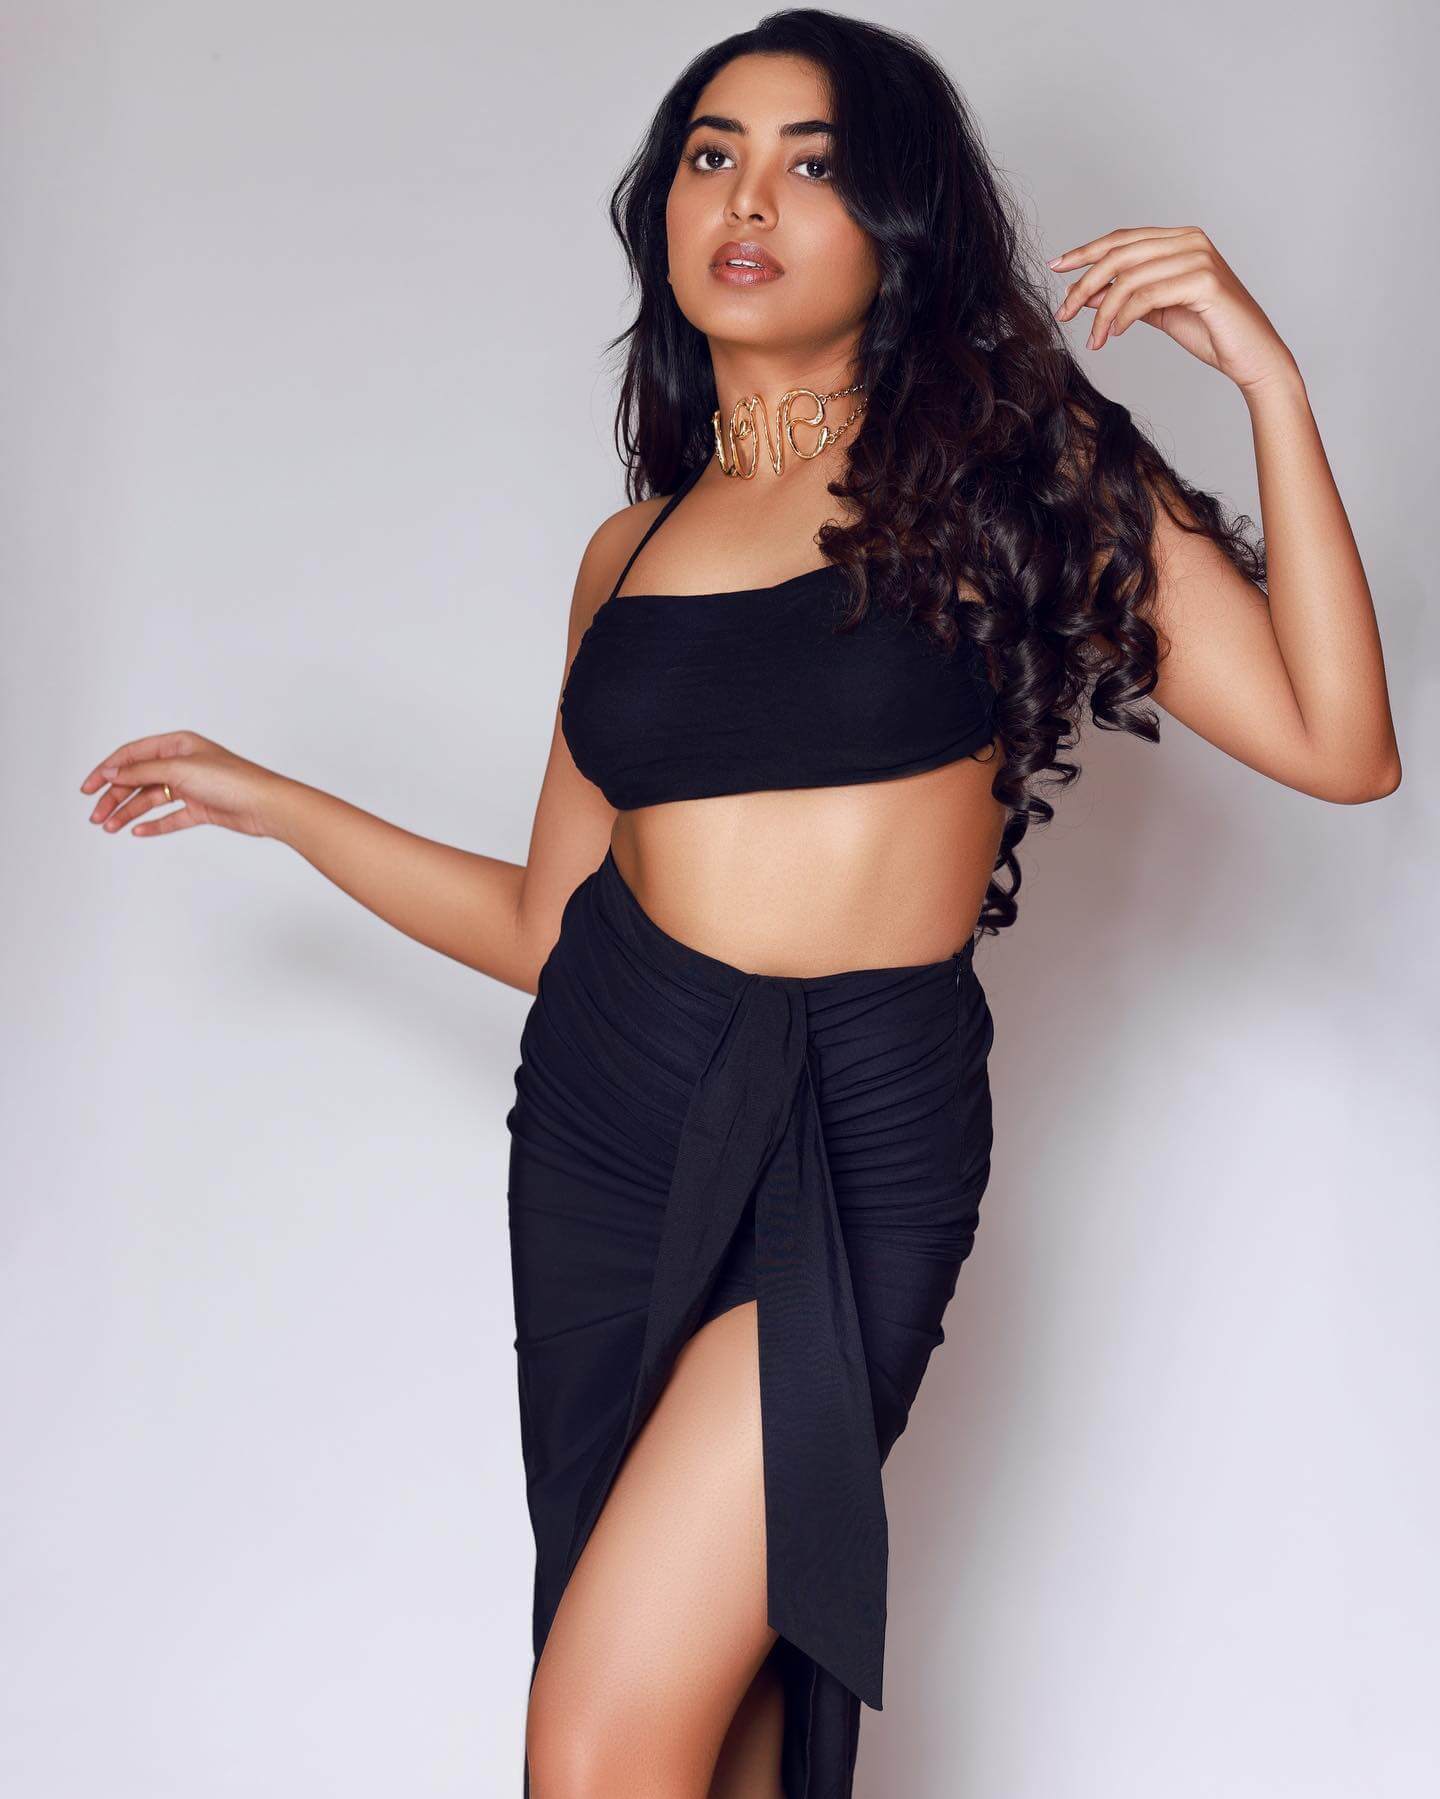 Hotness Alert! Shivathmika Rajashekar In Black Crop Top & Black Skirt